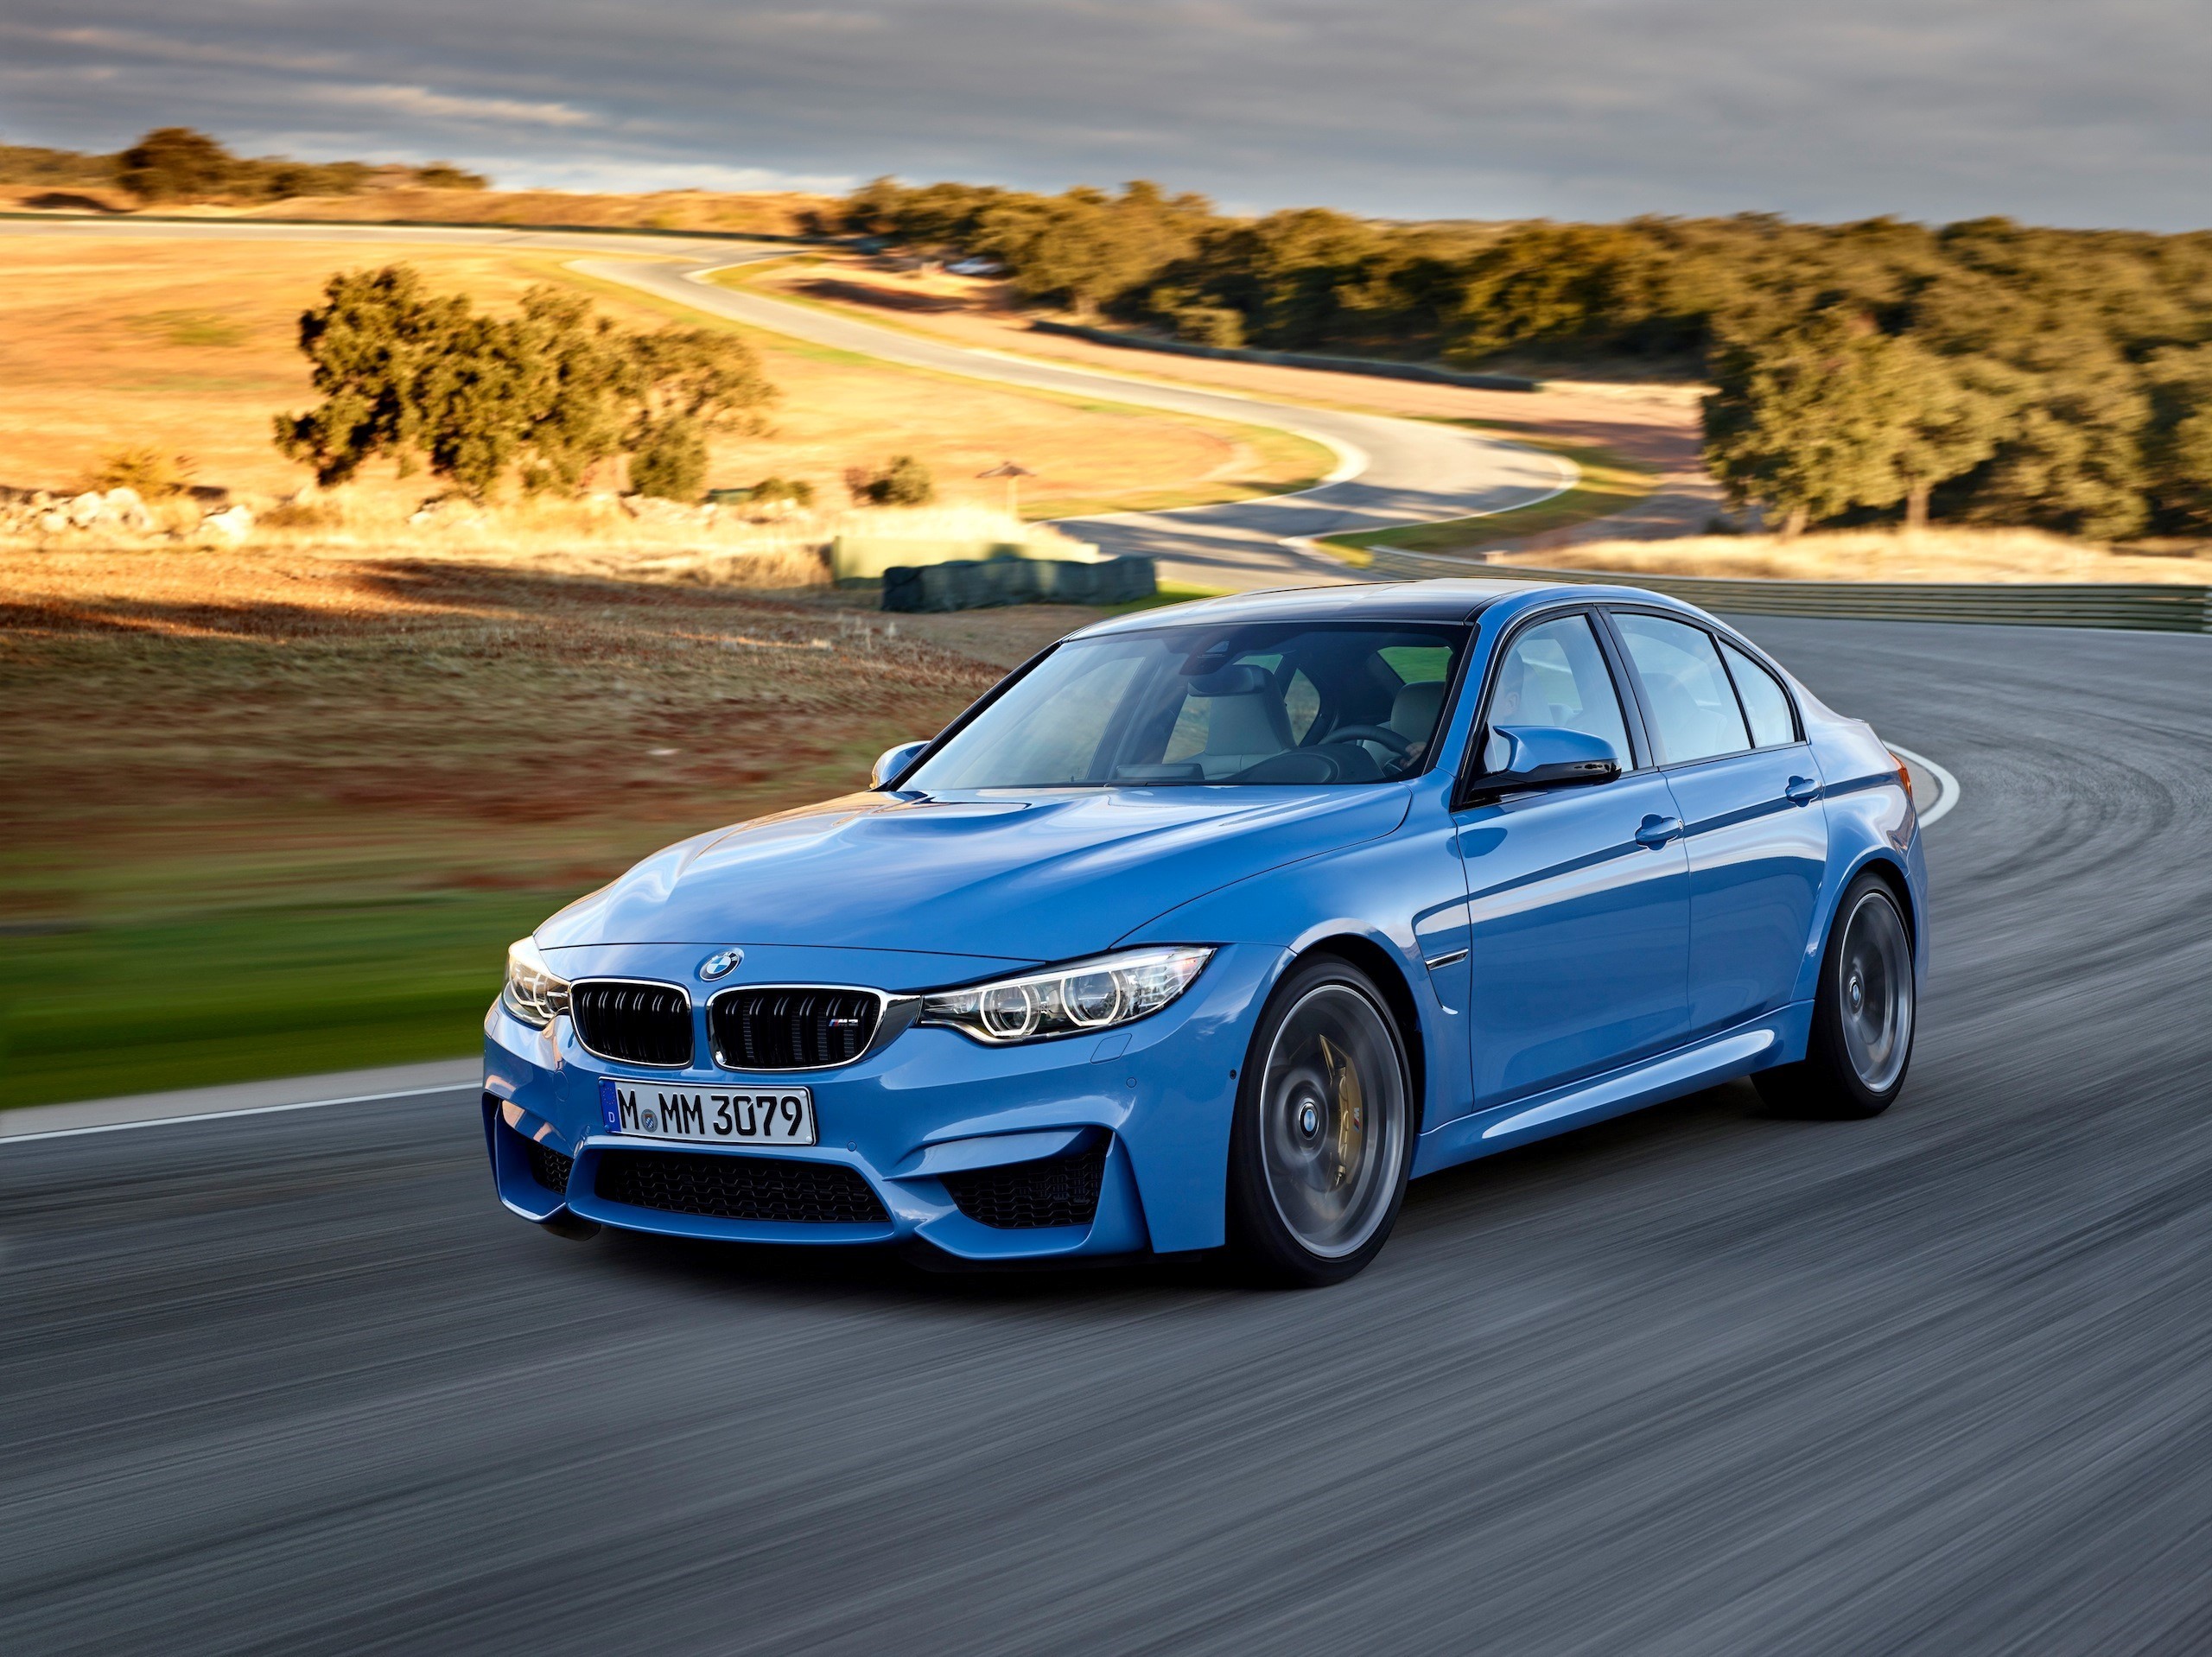 2560x1918 New Blue BMW M3 High Racing Car Wallpaper | HD Wallpapers